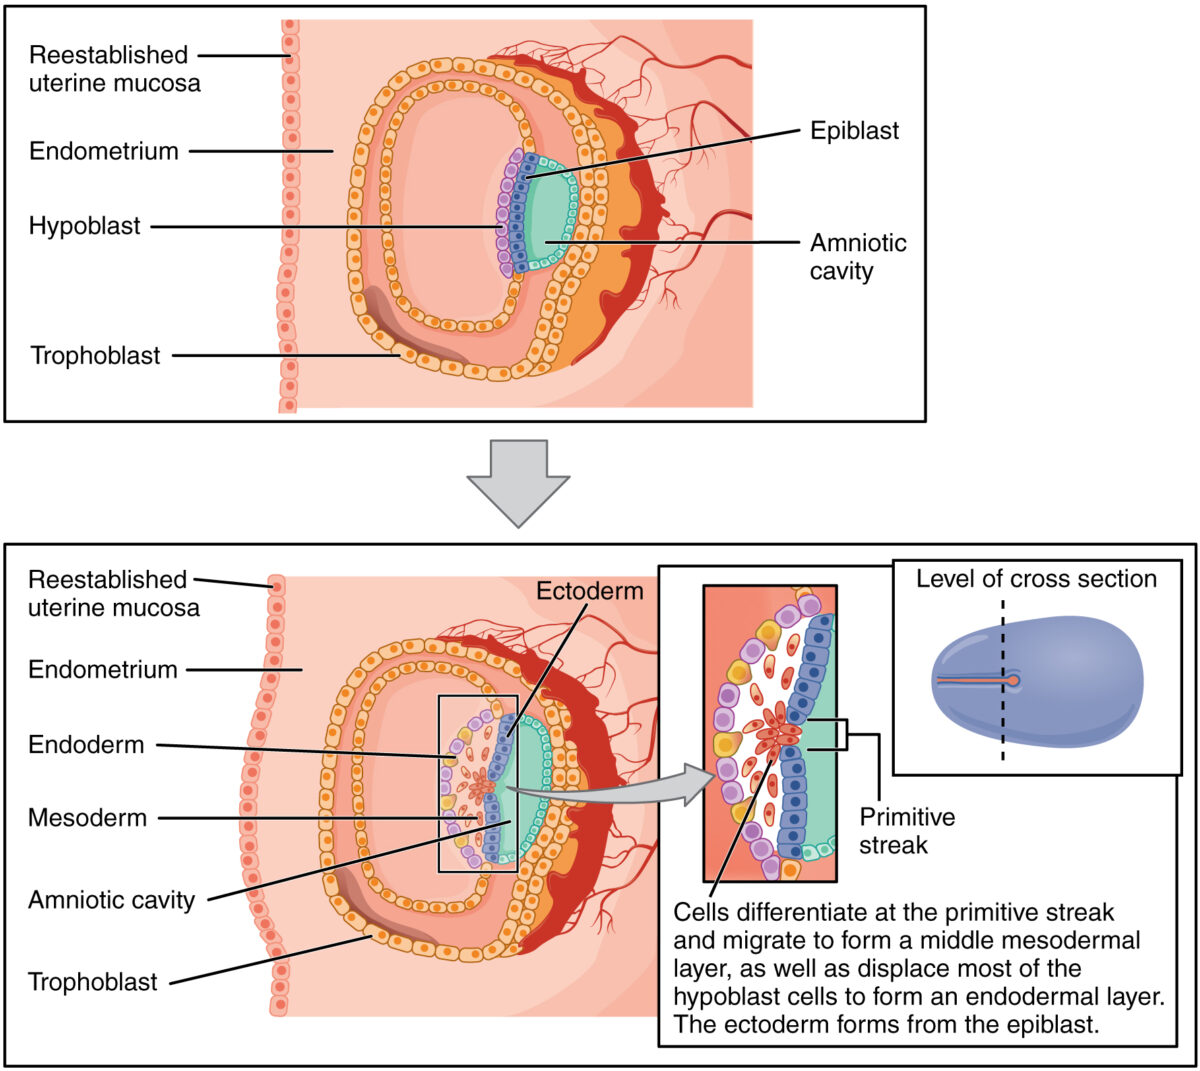 Process of gastrulation